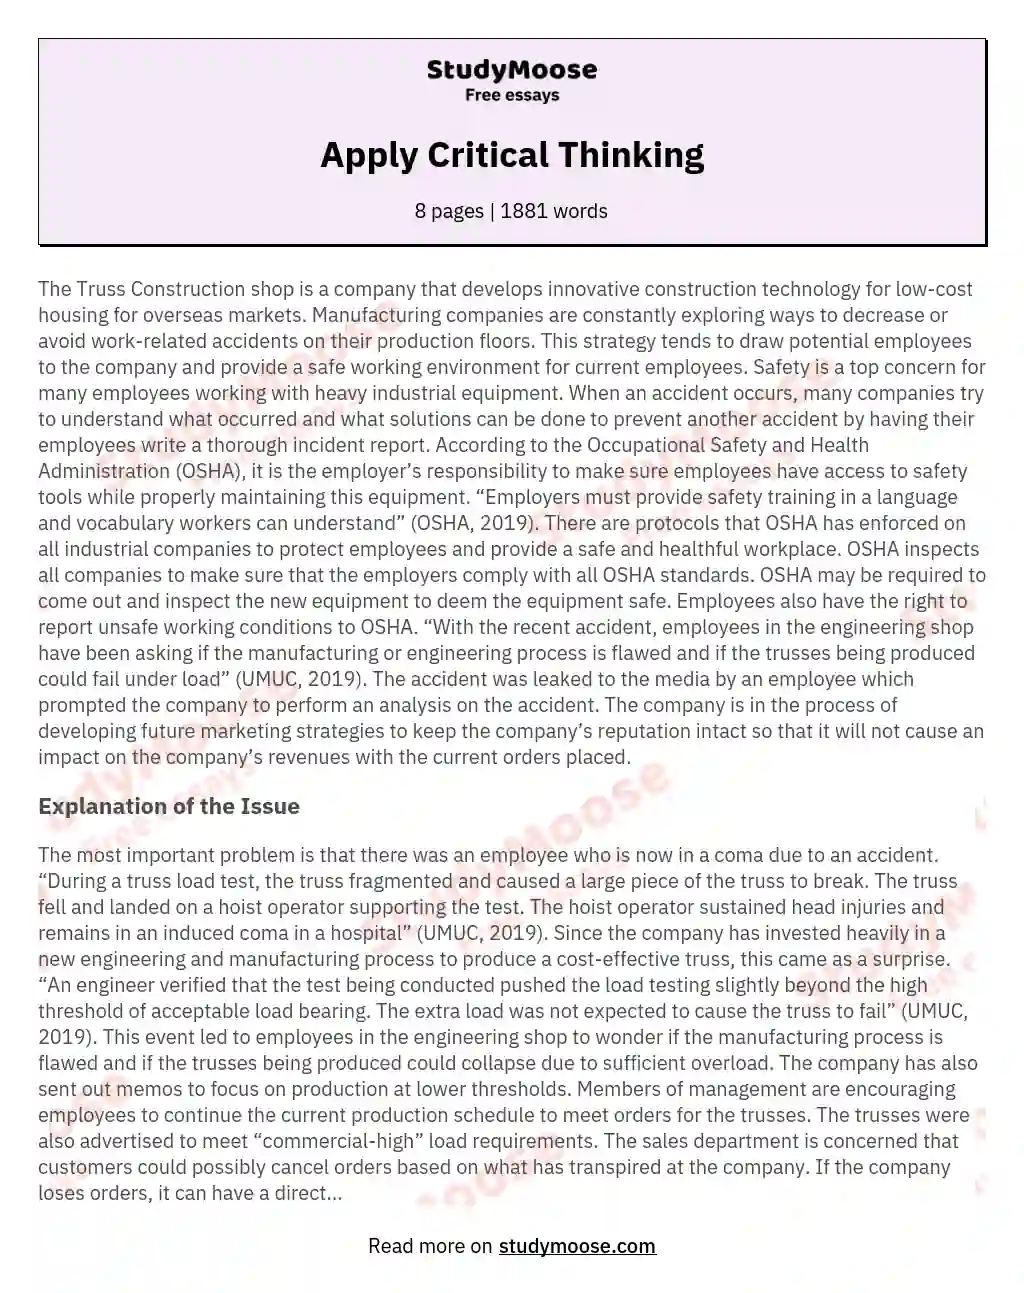 Apply Critical Thinking essay